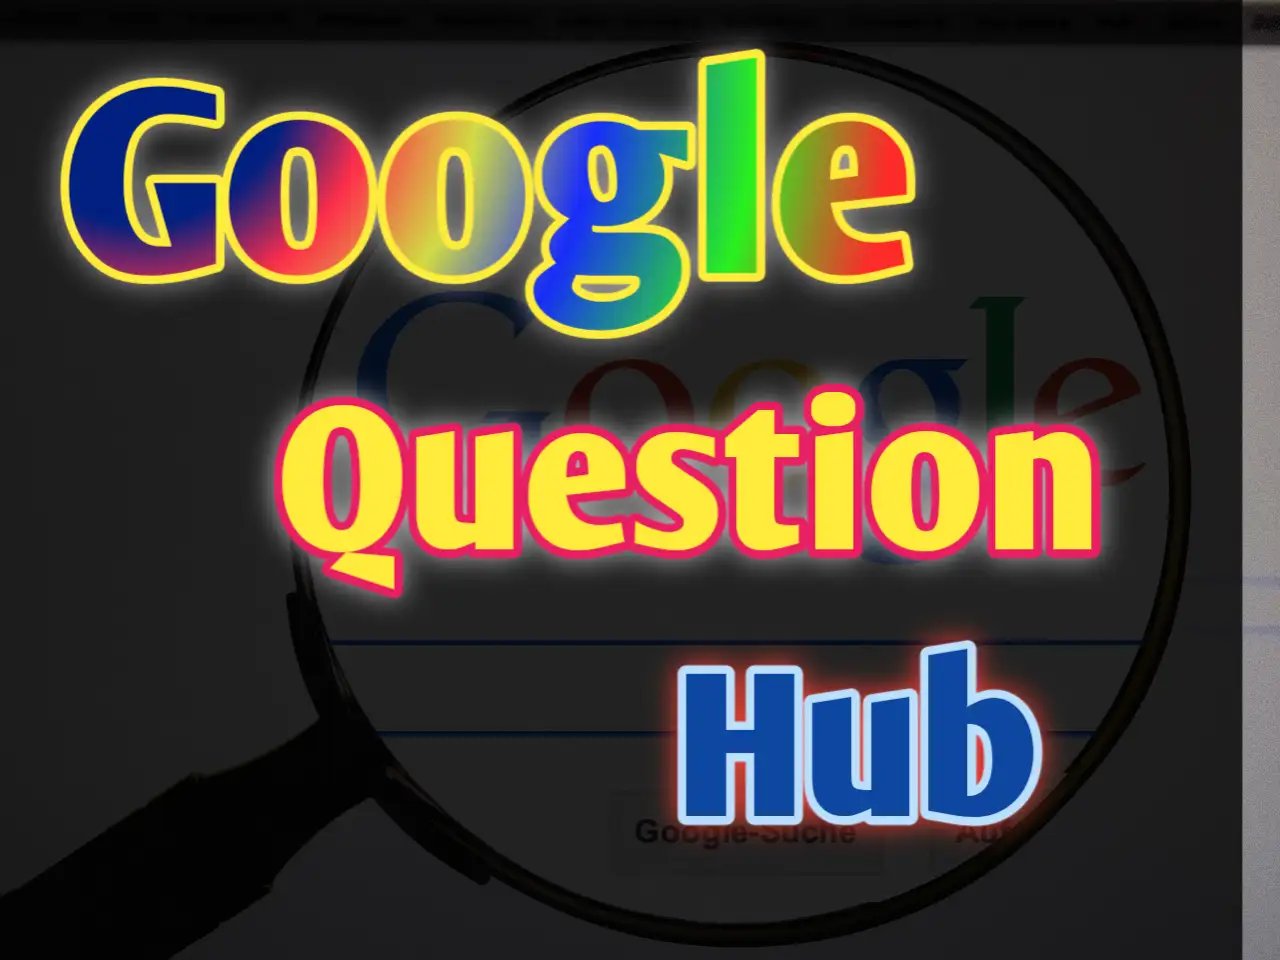 Google question hub